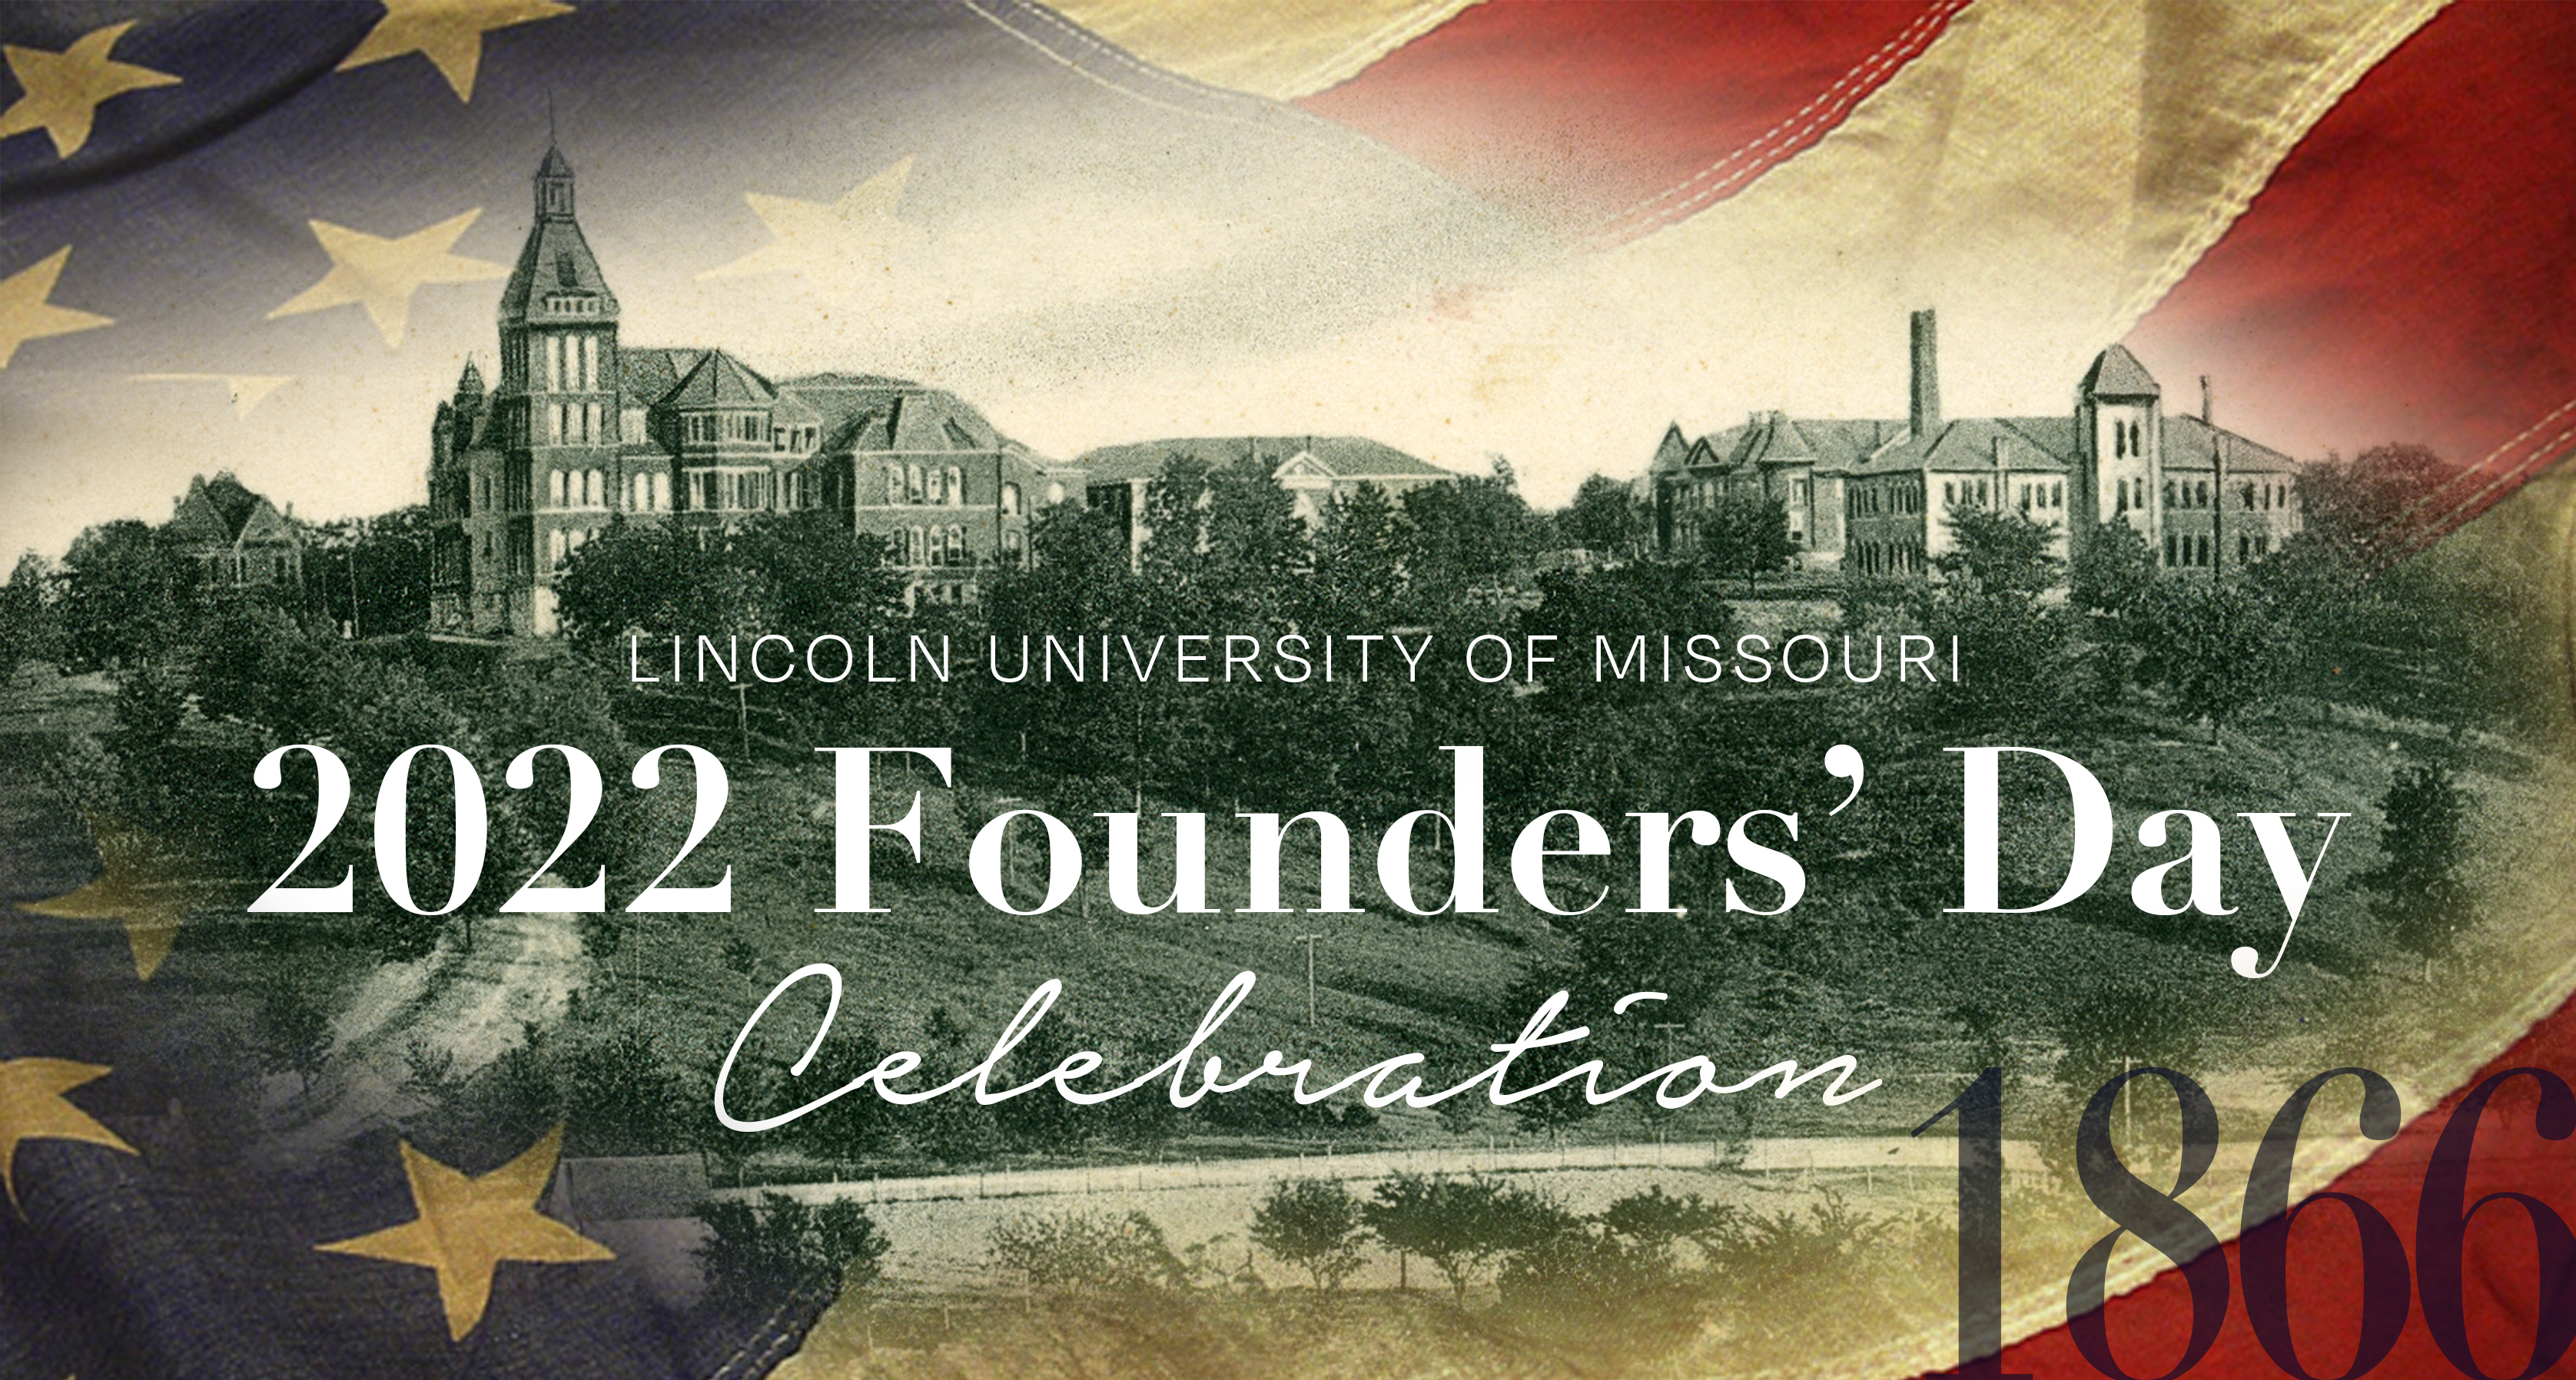 LU celebrated Founder's Day Feb. 10.